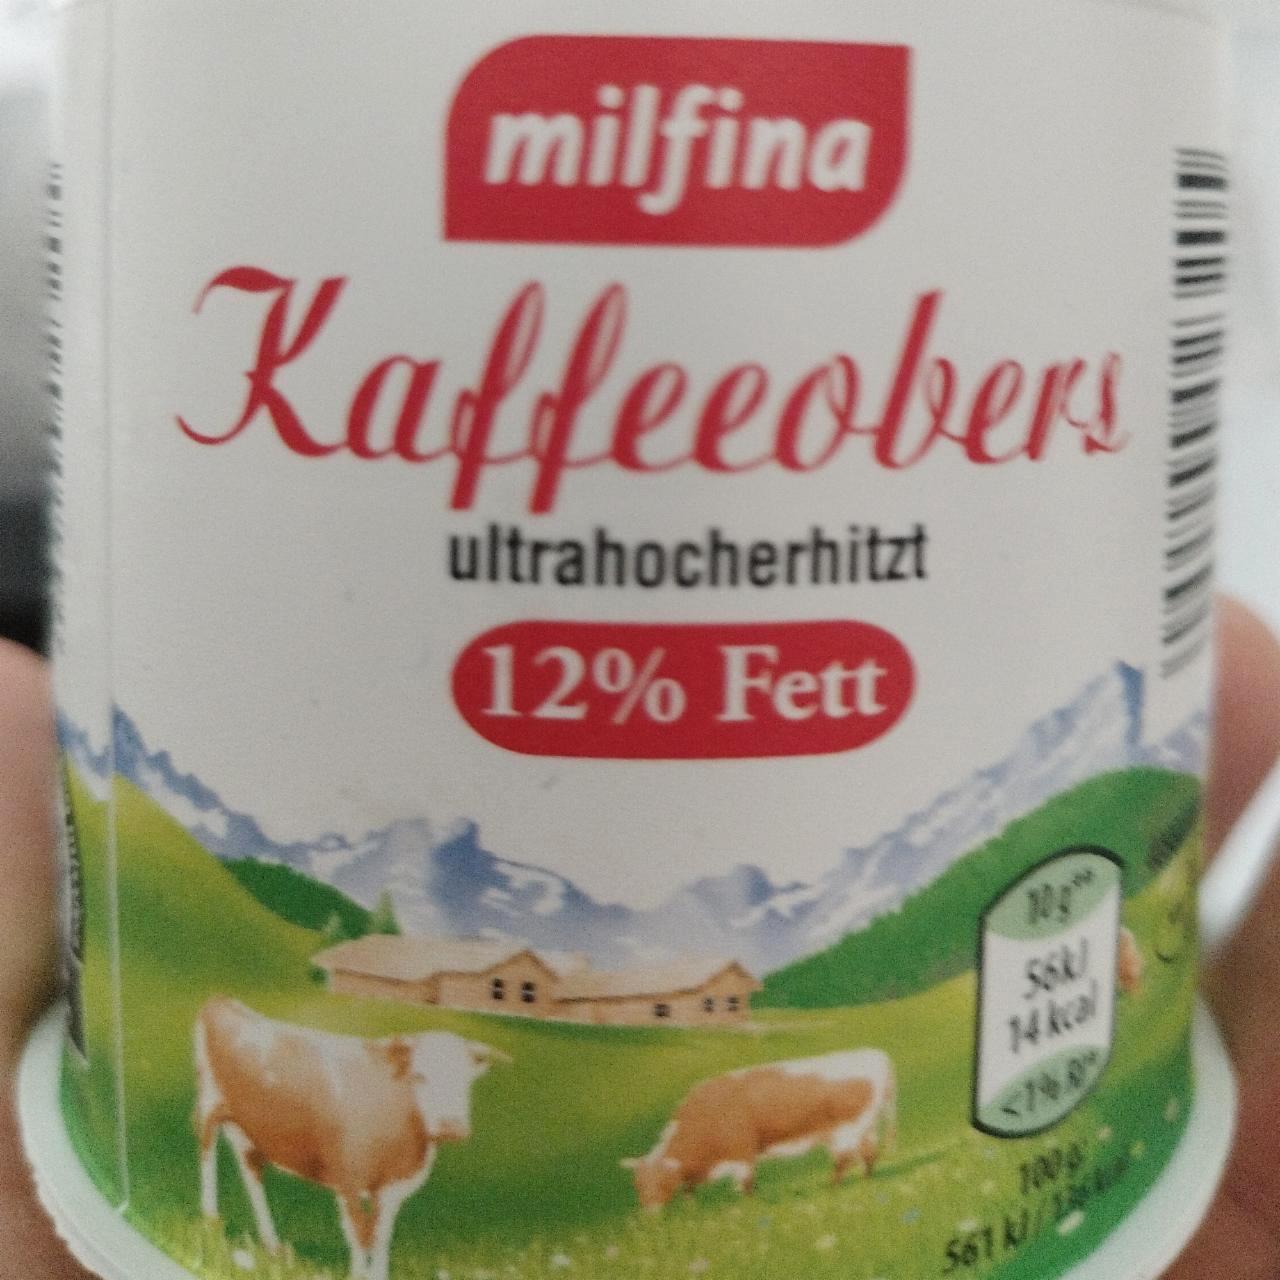 Képek - Kaffeeobers 12% kávé tejszín Milfina